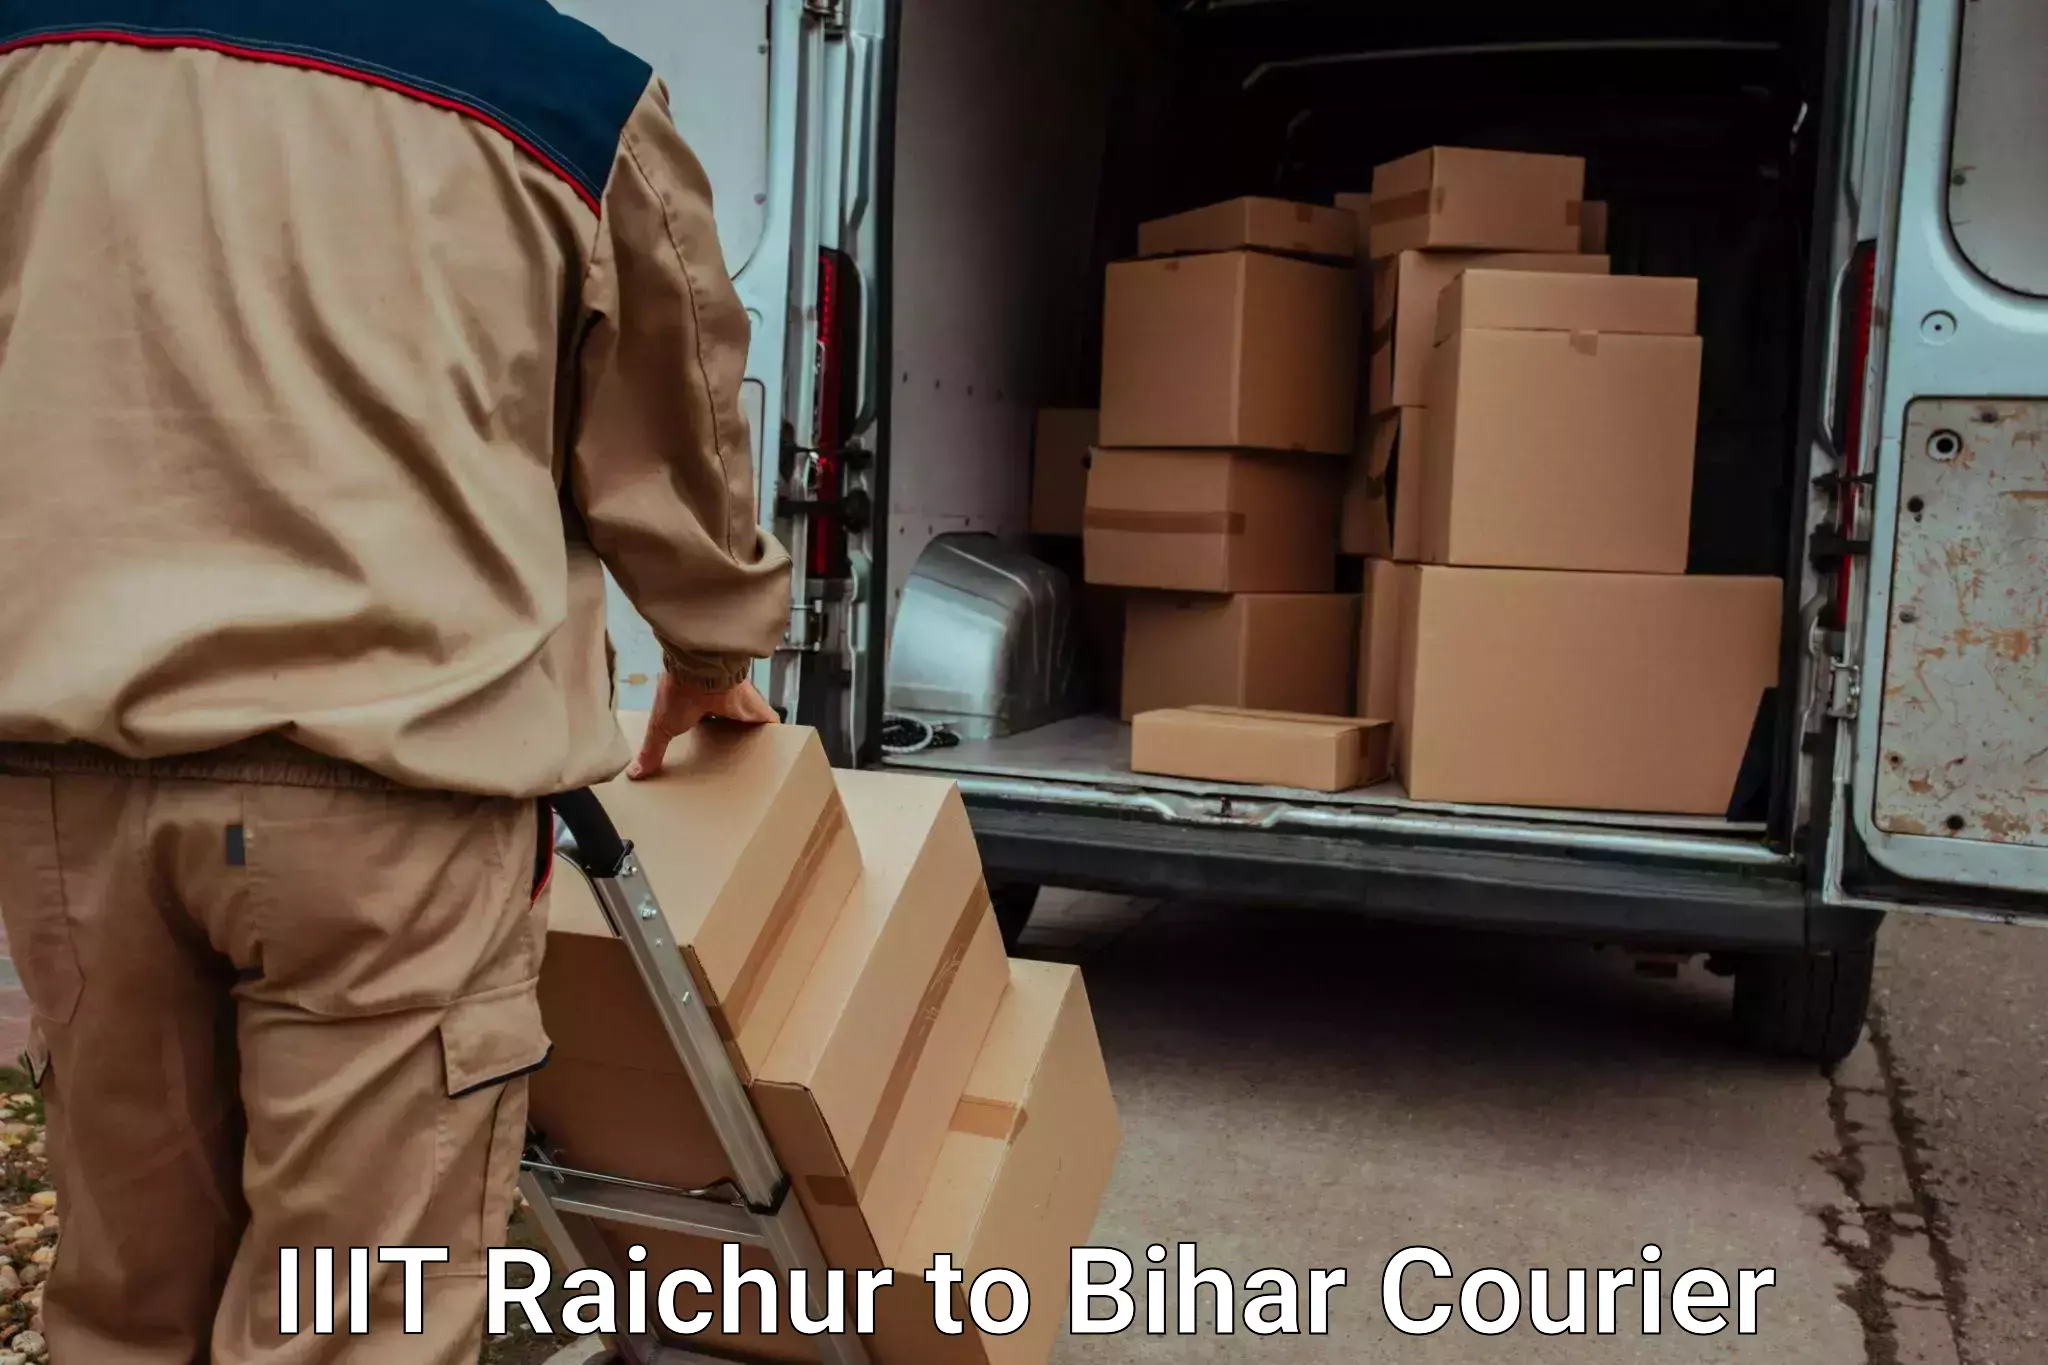 Trusted relocation experts IIIT Raichur to Dehri